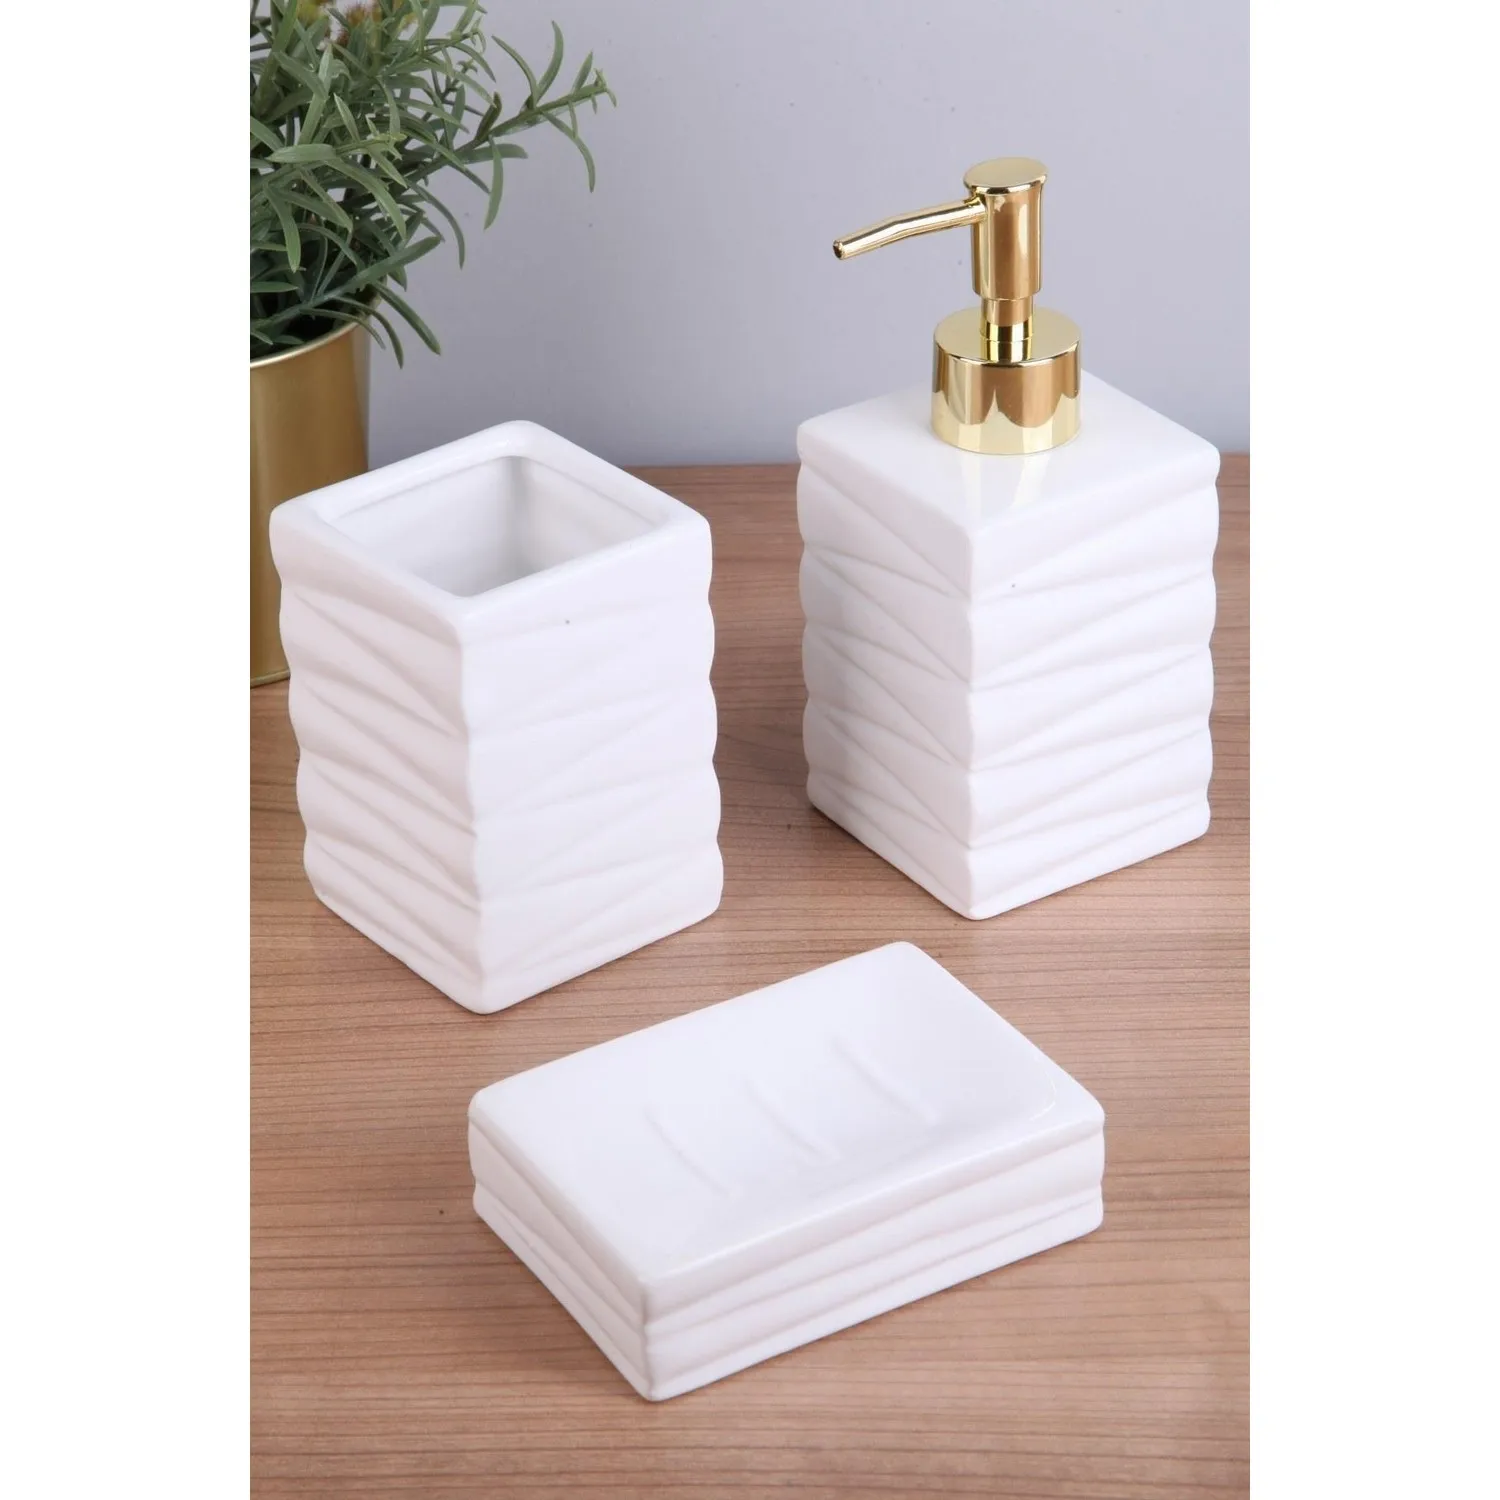 2022-model-vip-gross-3-piece-ceramic-bathroom-set-square-bathroom-accessories-bathroom-liquid-soap-dispenser